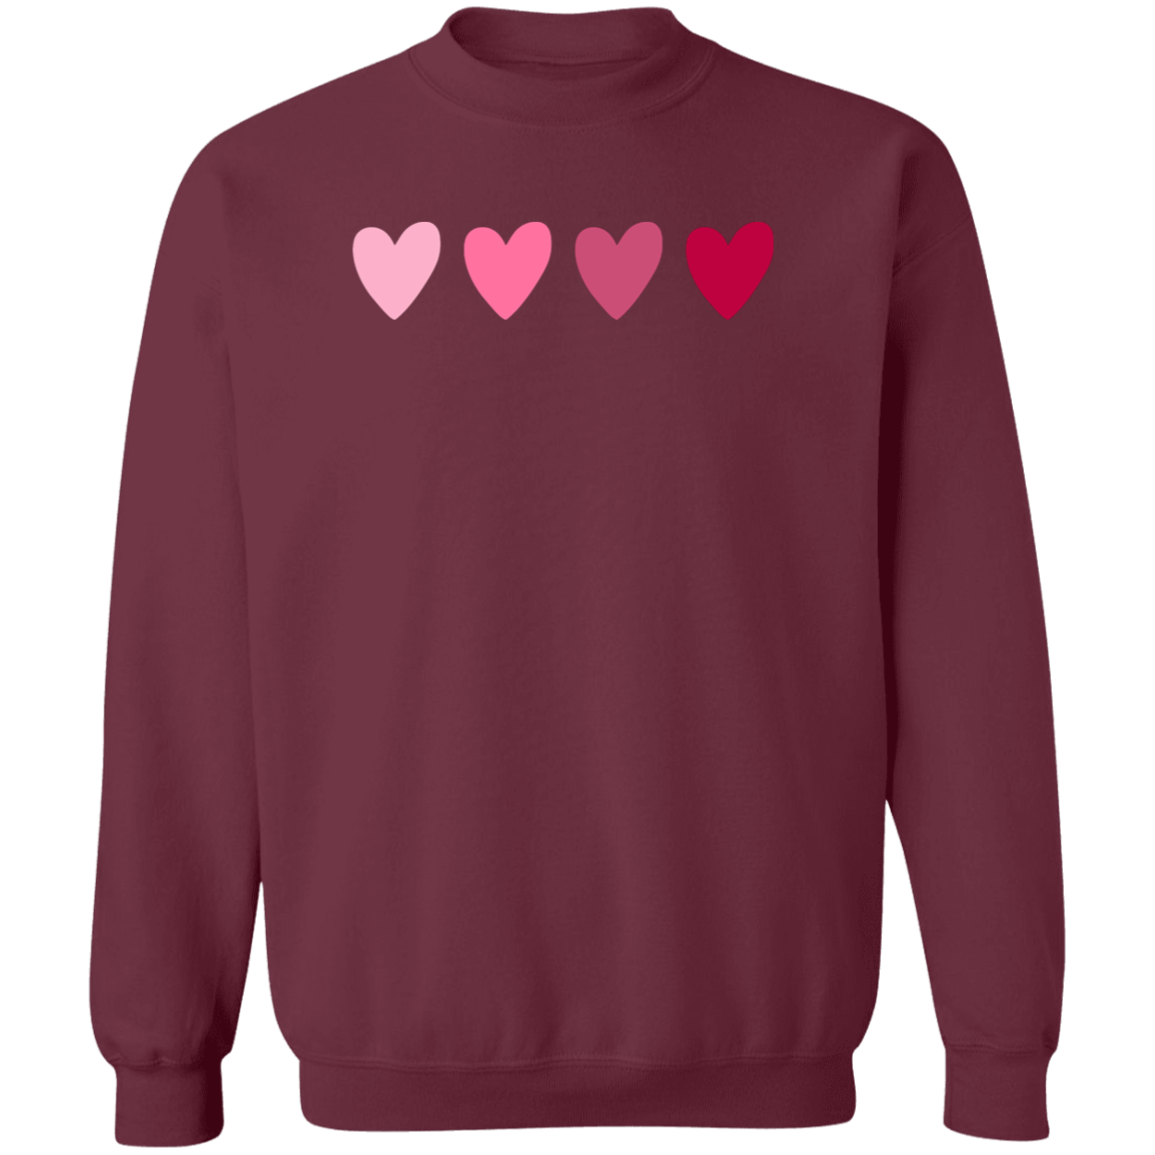 Lovely Little Hearts- Ladies Sweatshirt, Valentine's Day, Winter